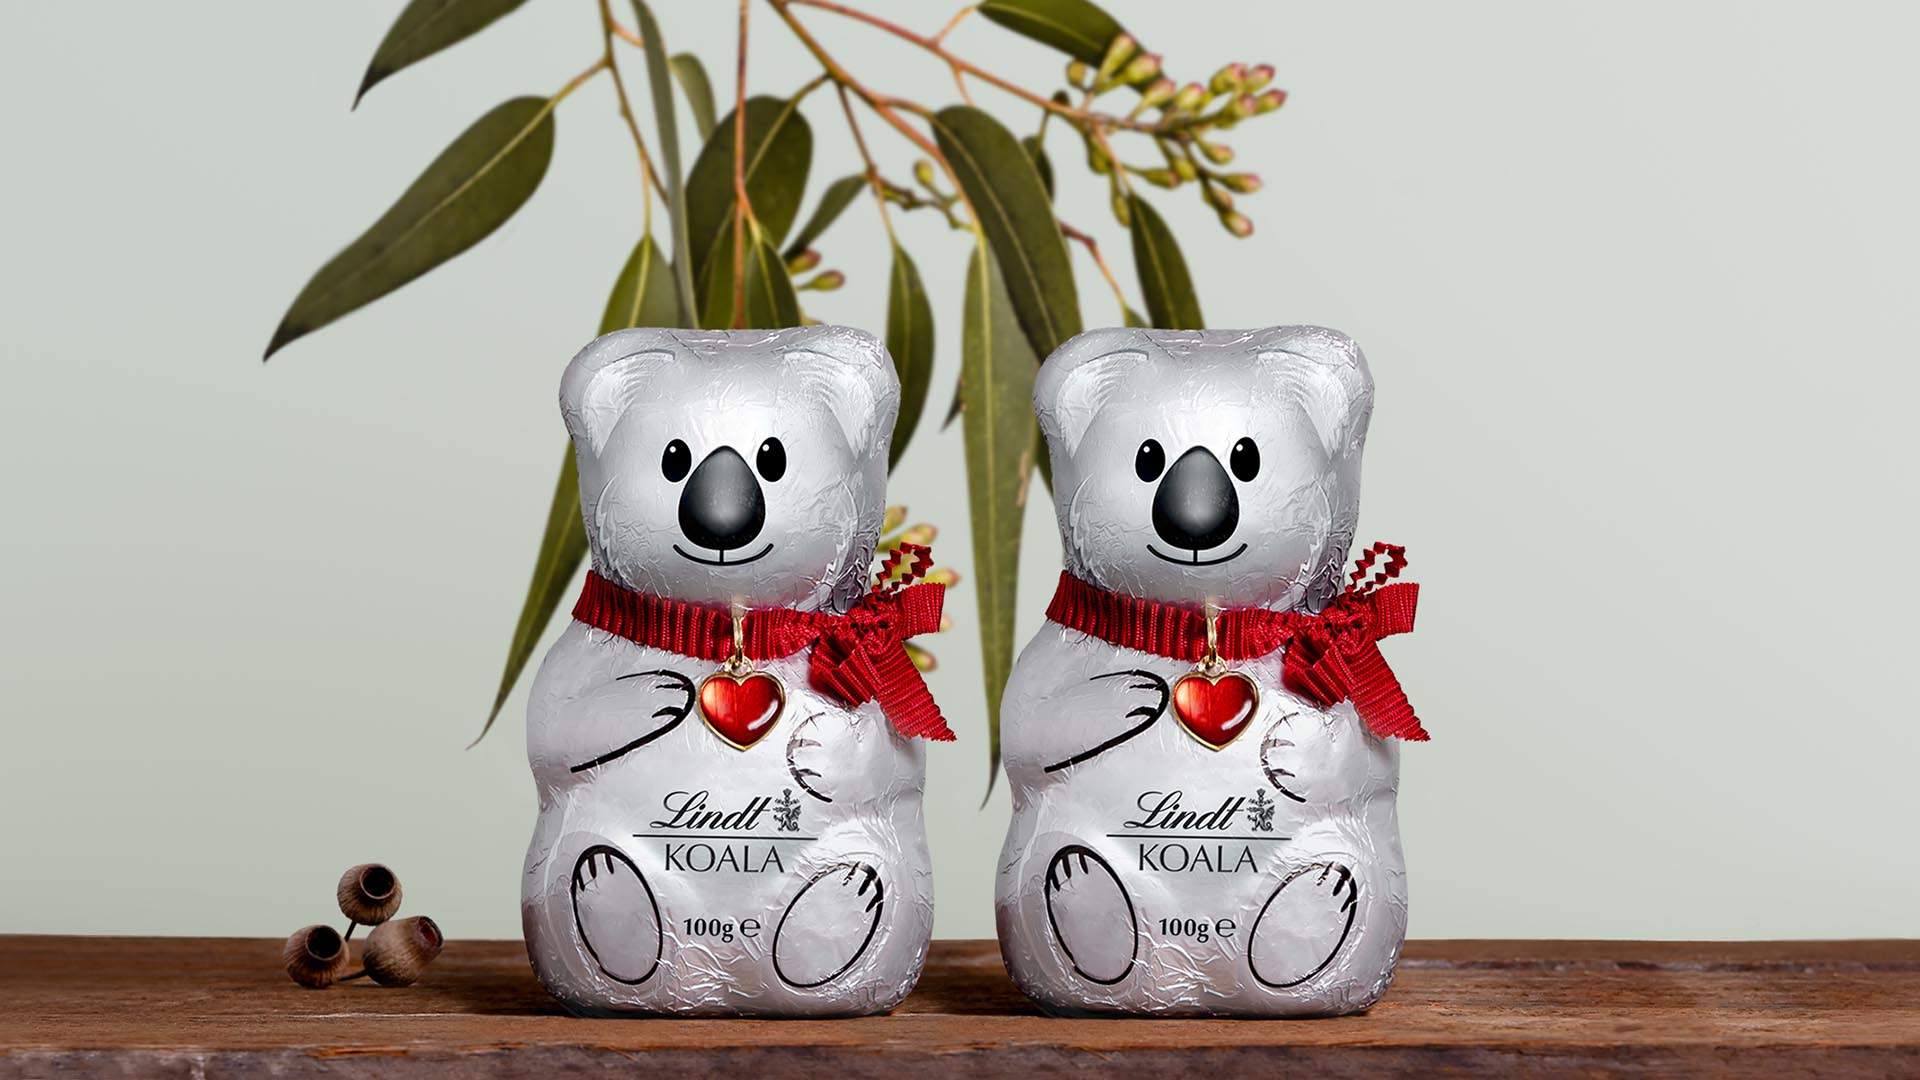 Lindt Has Released a New Chocolate Koala to Help Raise Funds for the Australian Koala Foundation